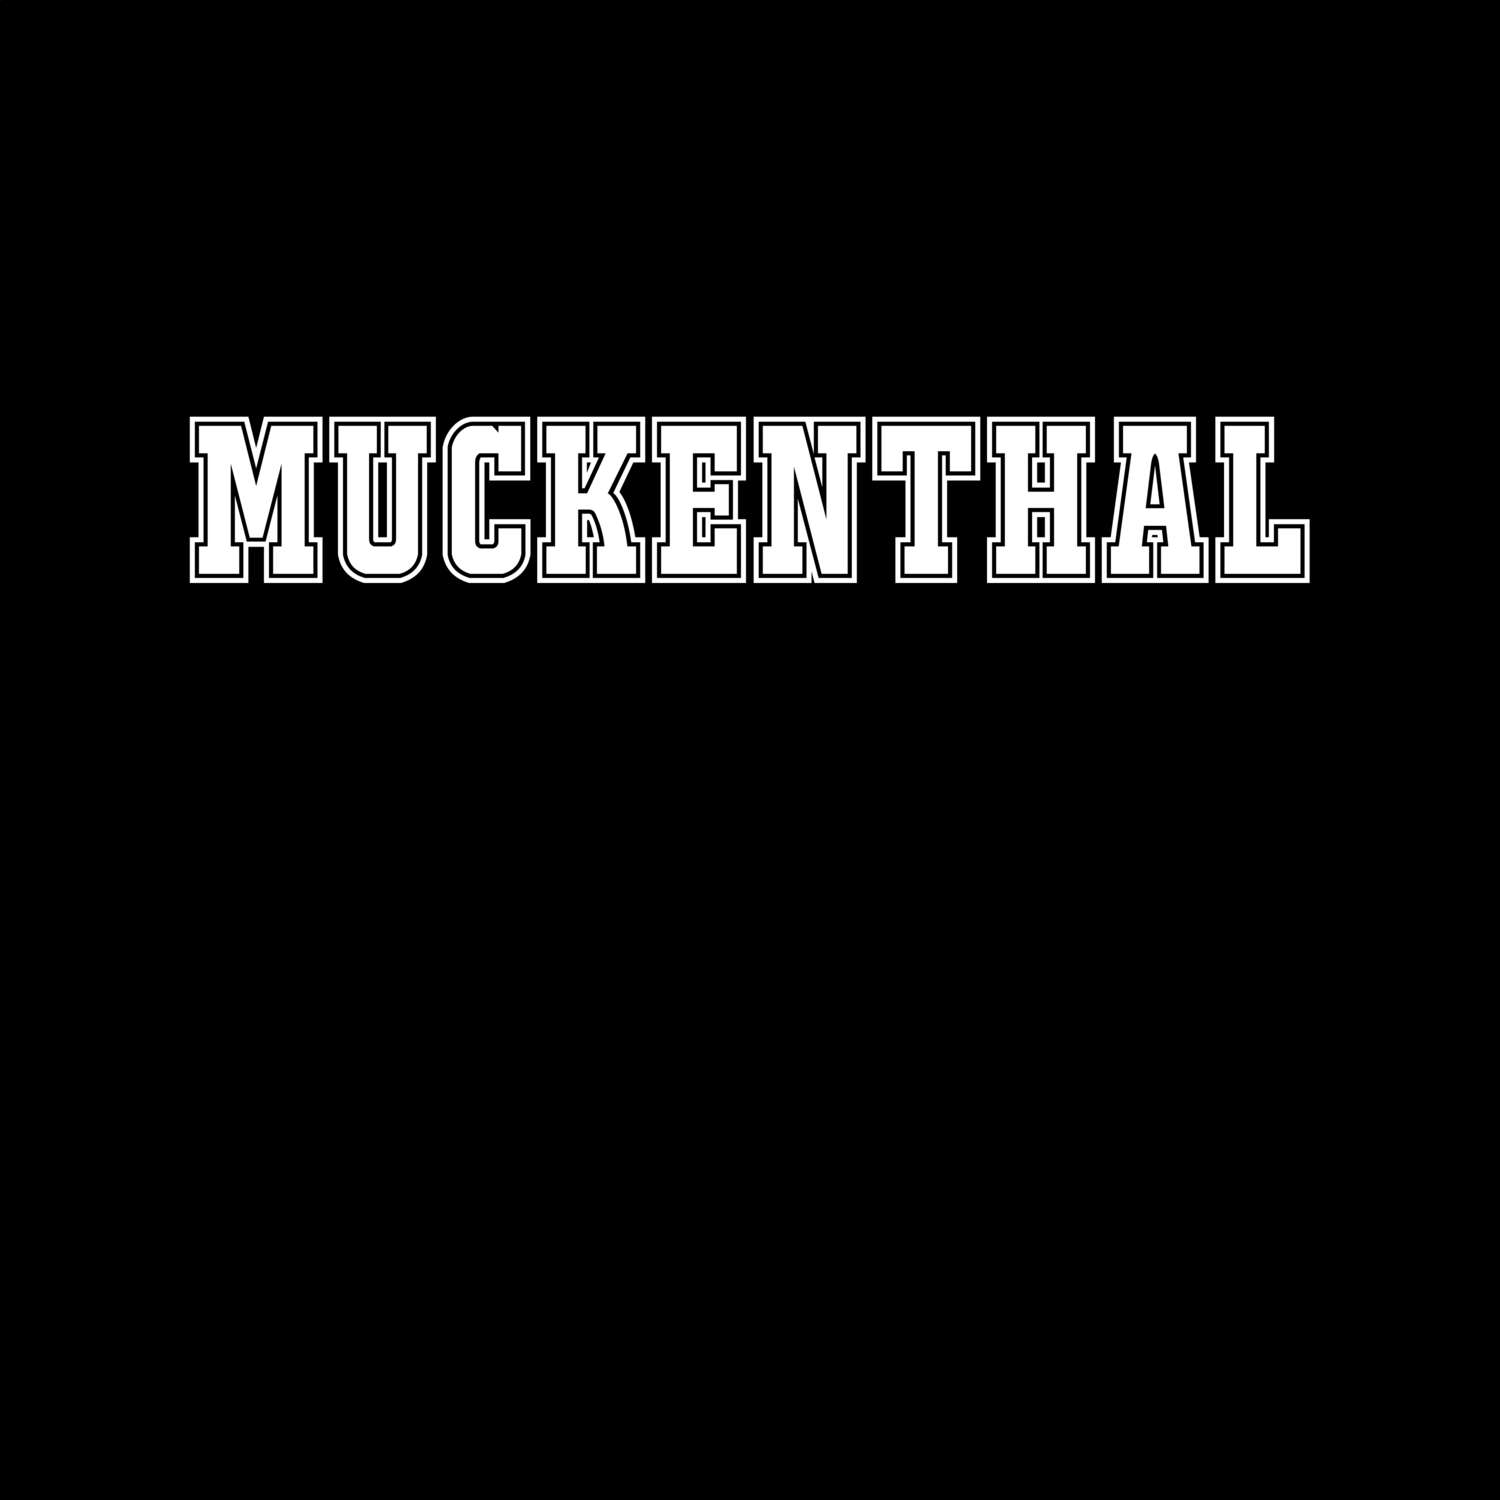 Muckenthal T-Shirt »Classic«